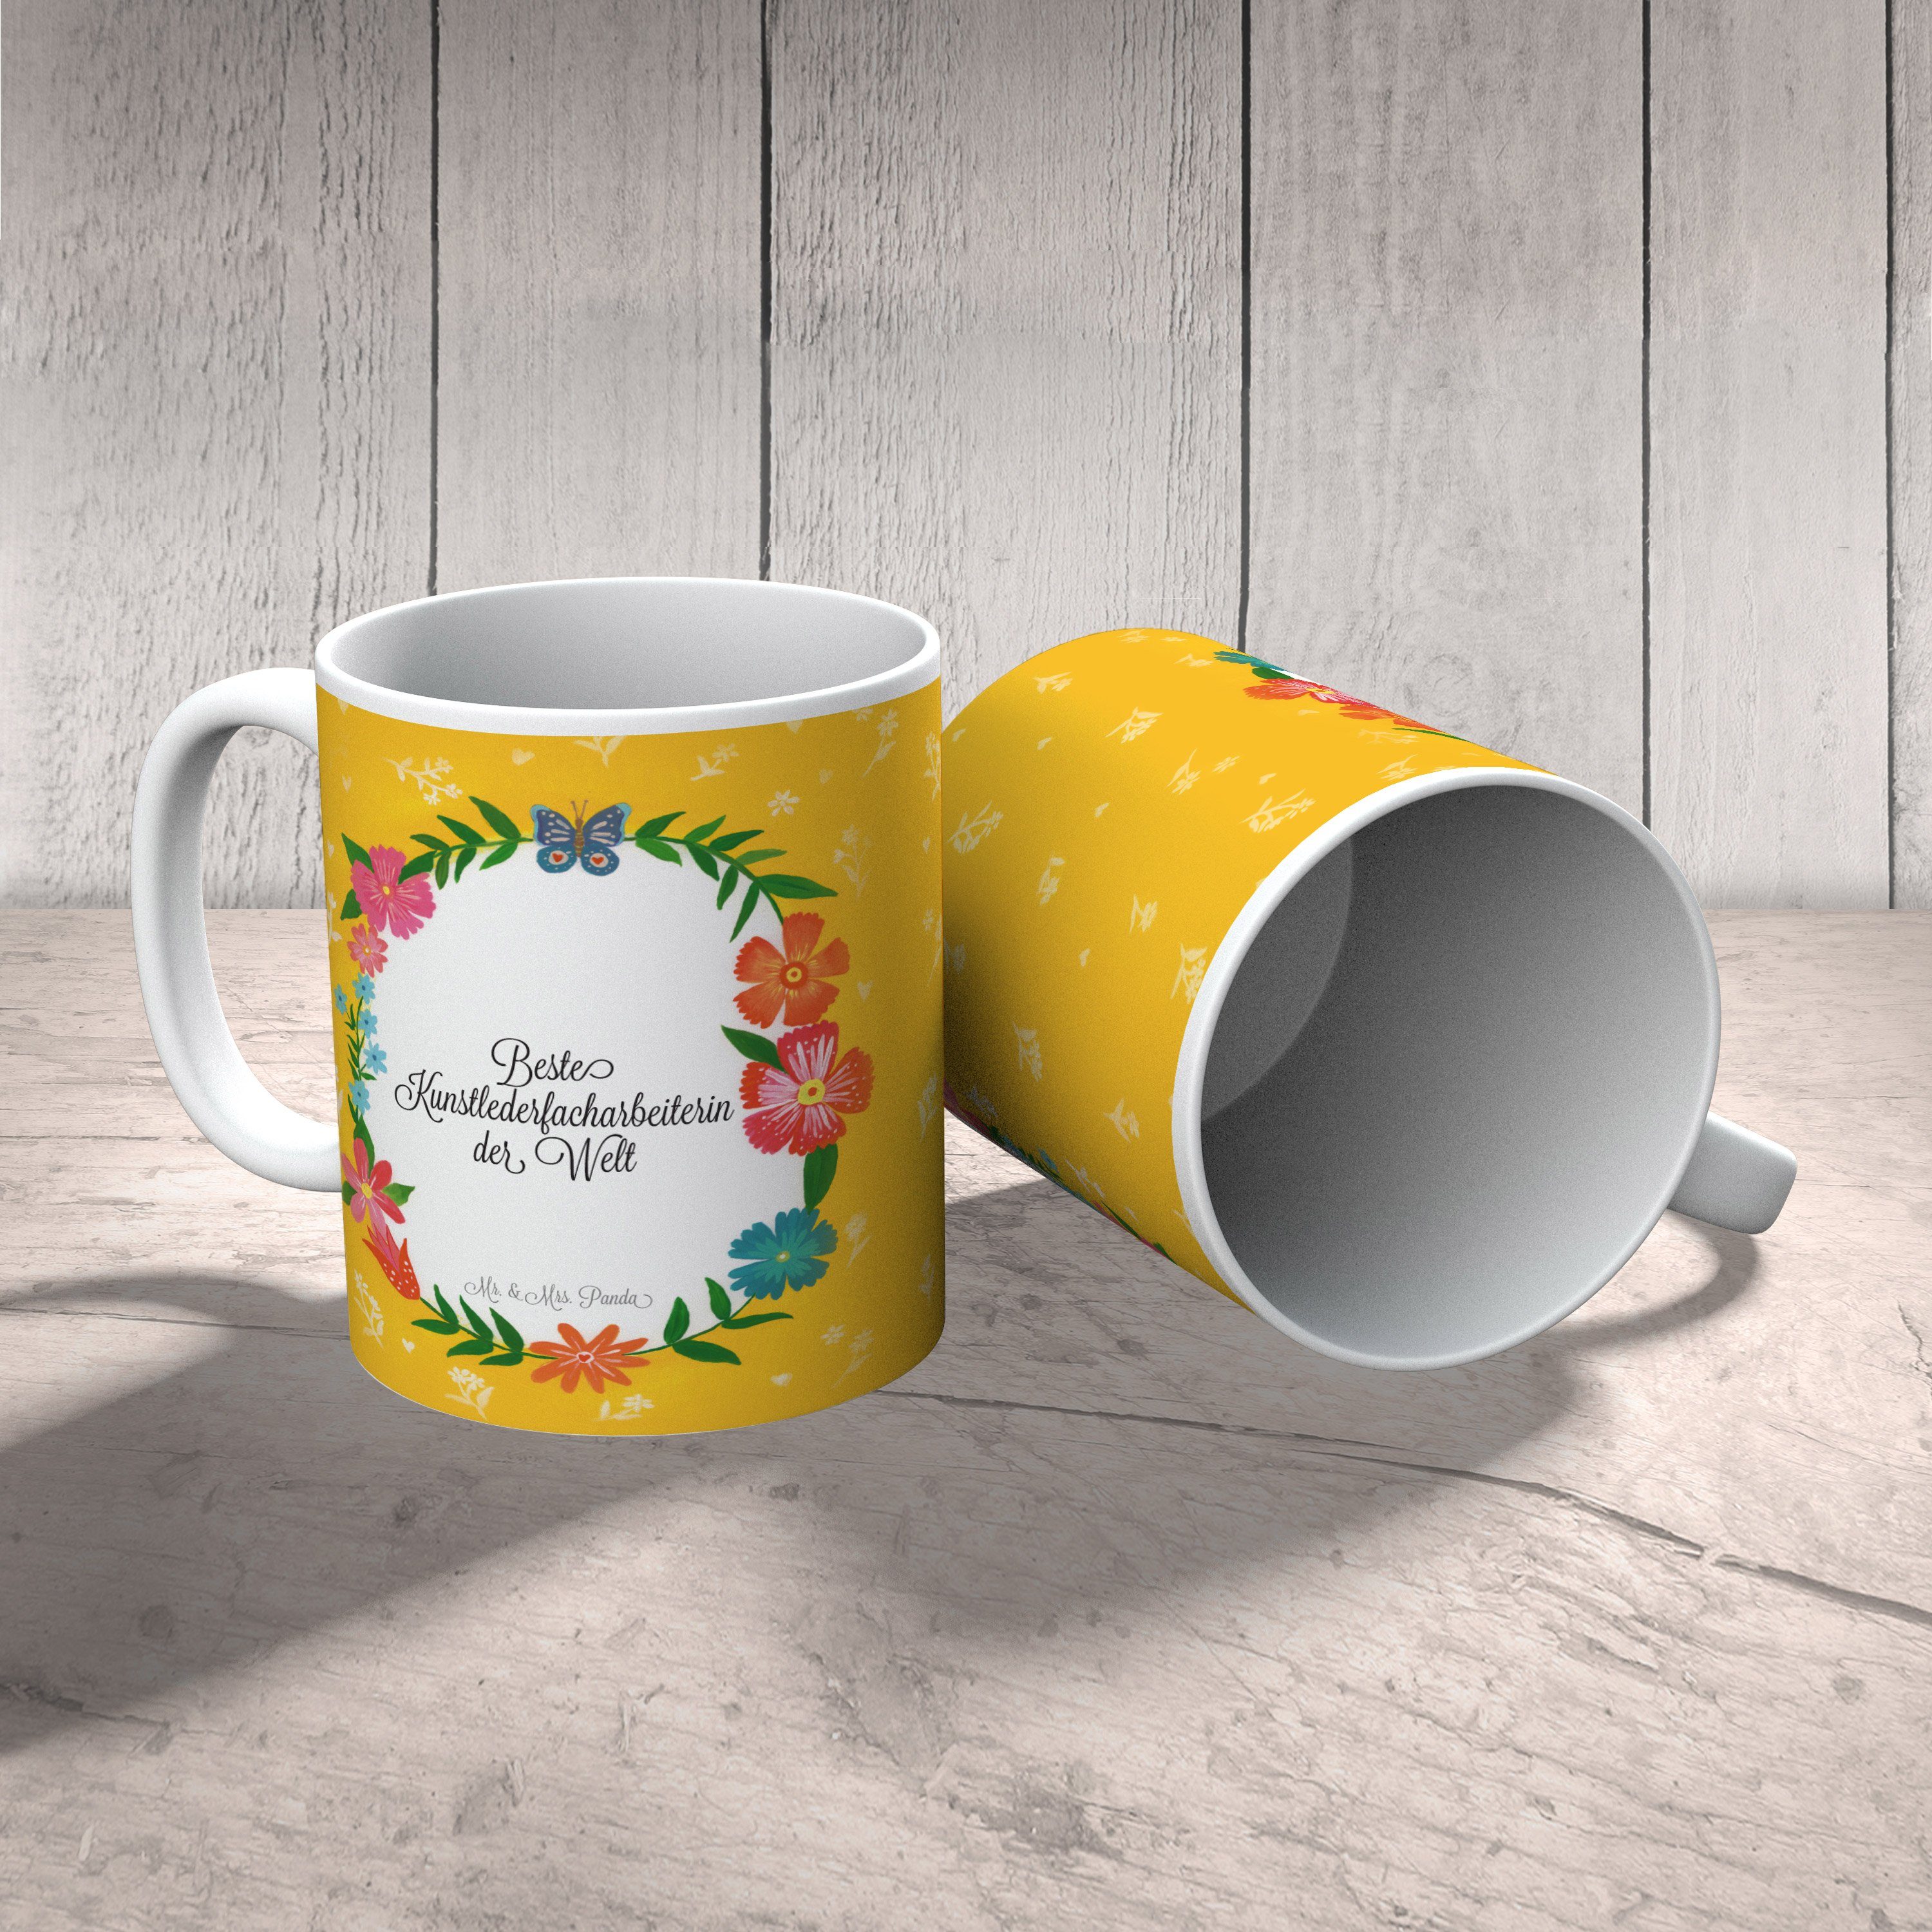 Mr. & Mrs. Panda Geschenk, - Kaffeebec, Porzellantasse, Tasse, Keramik Tasse Kunstlederfacharbeiterin